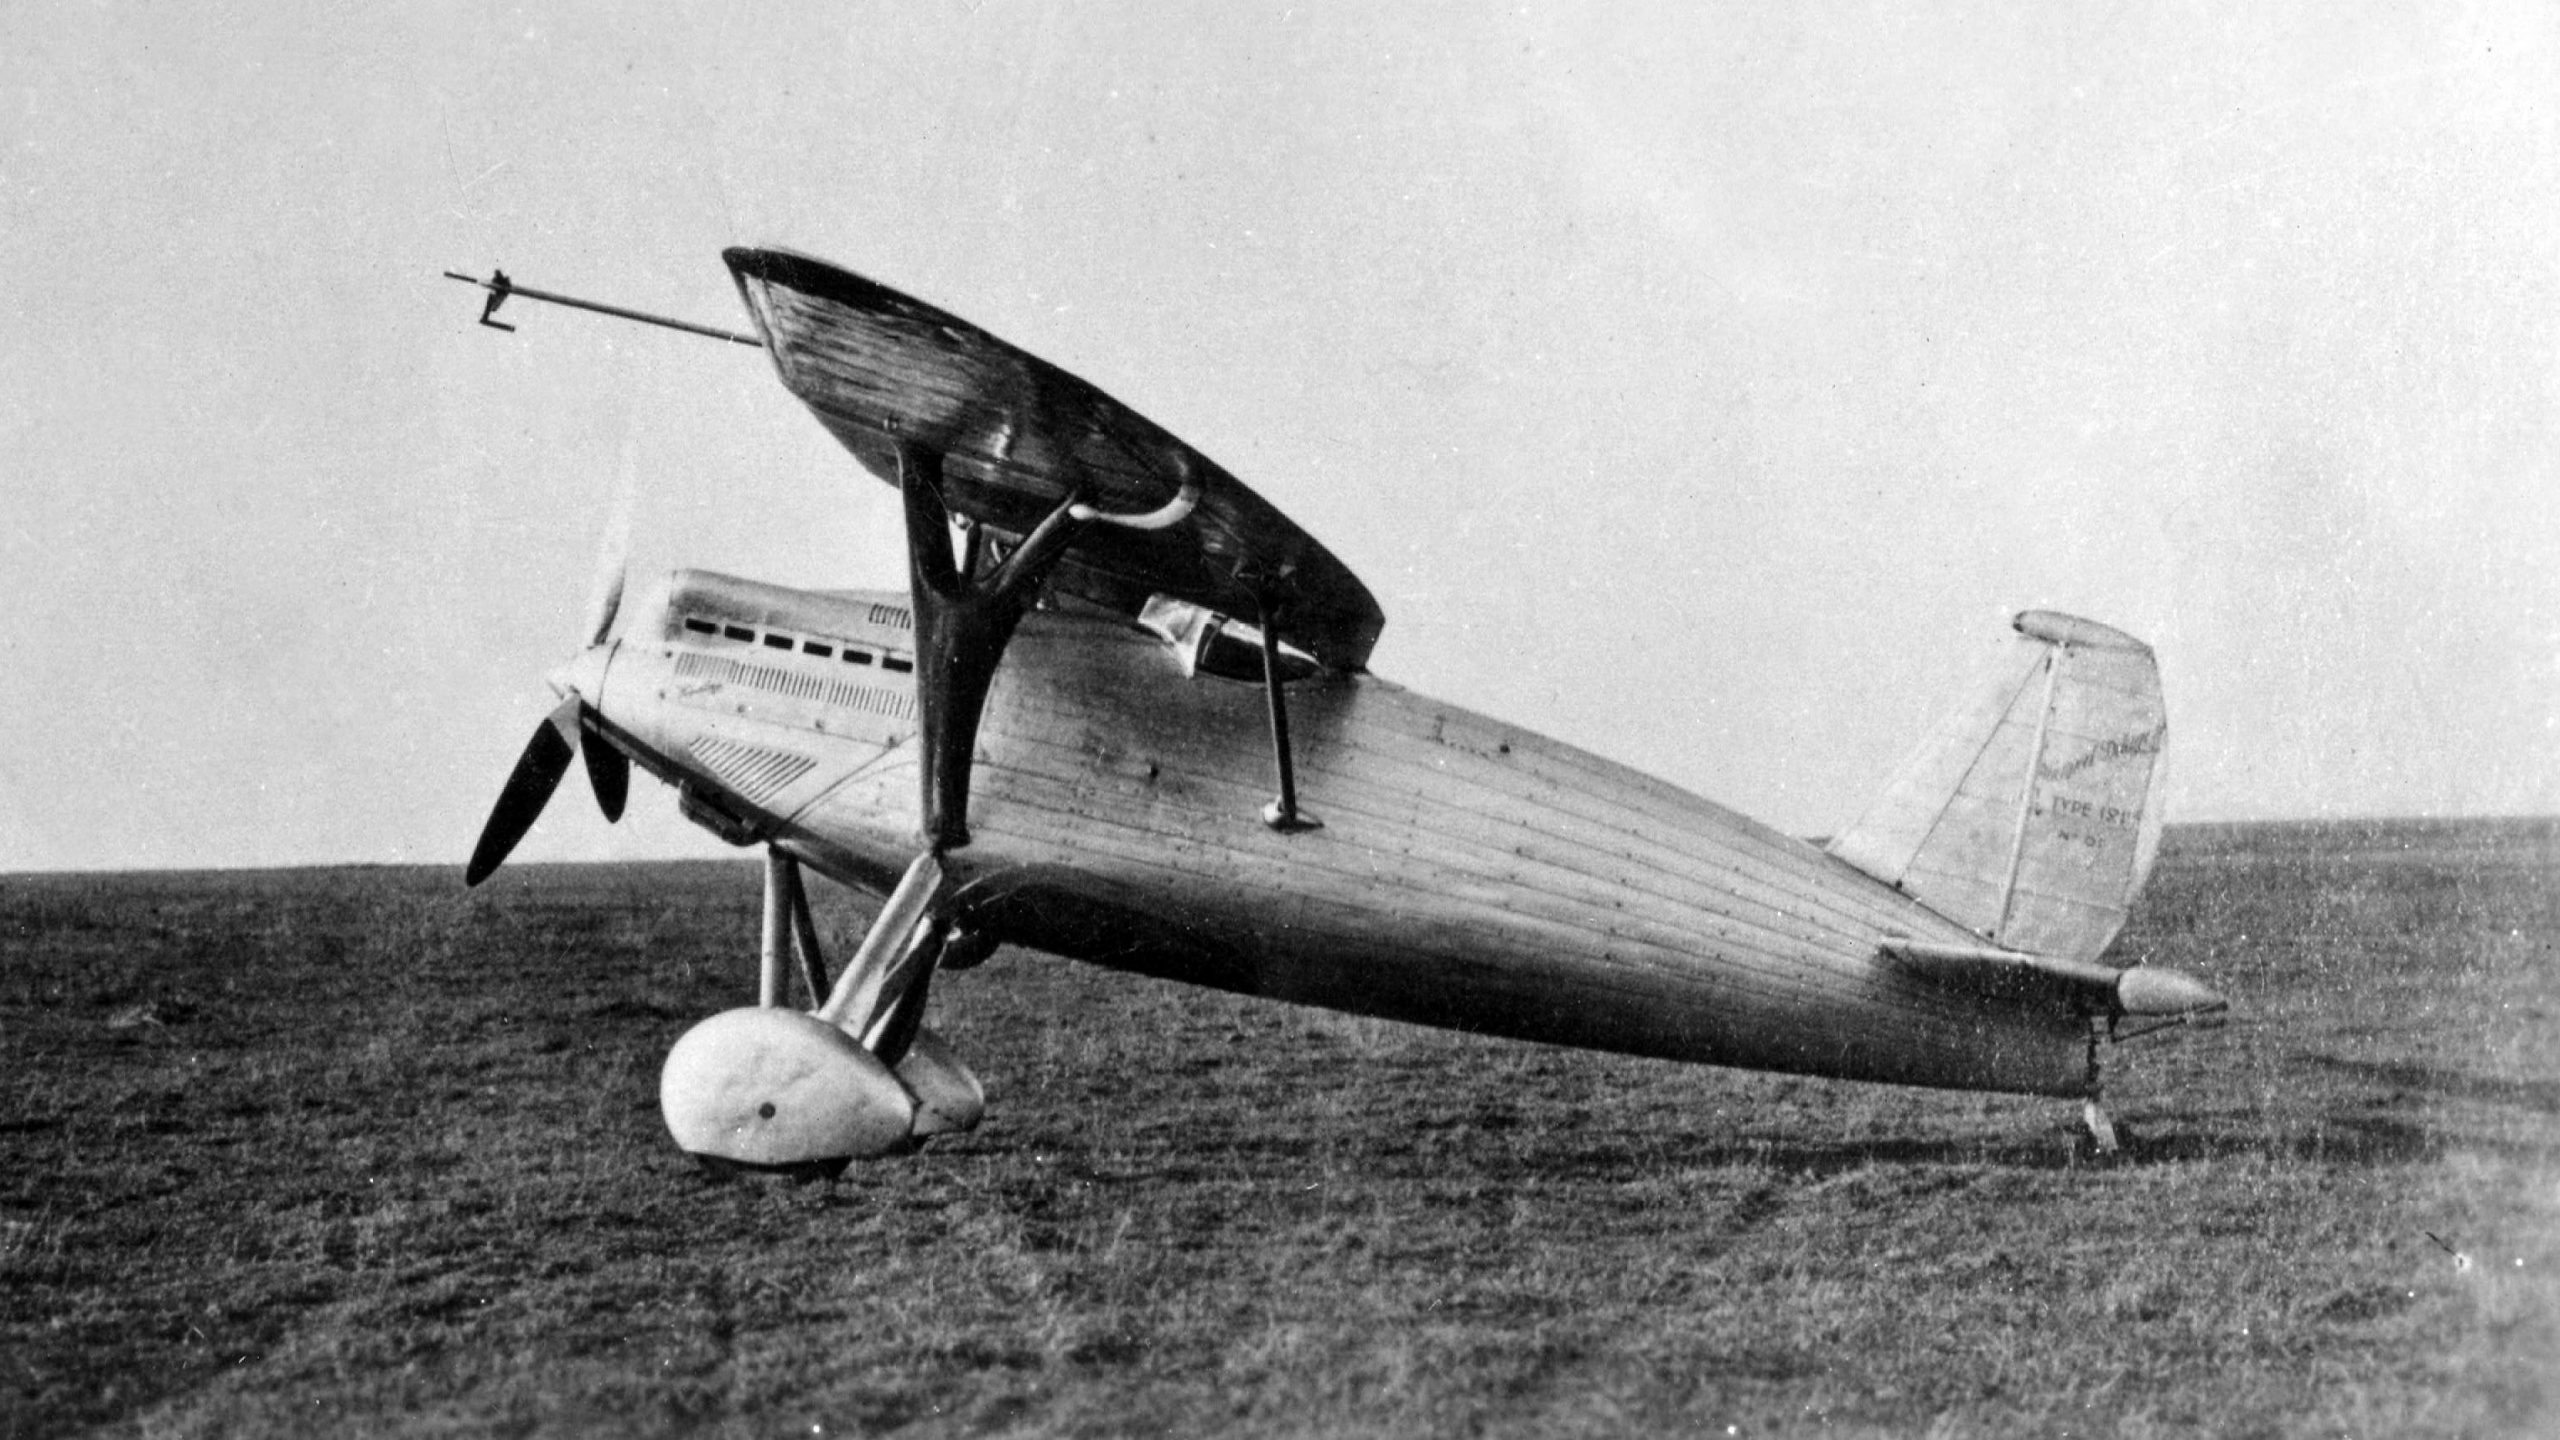 Nieuport Delage NiD.121C1 prototype